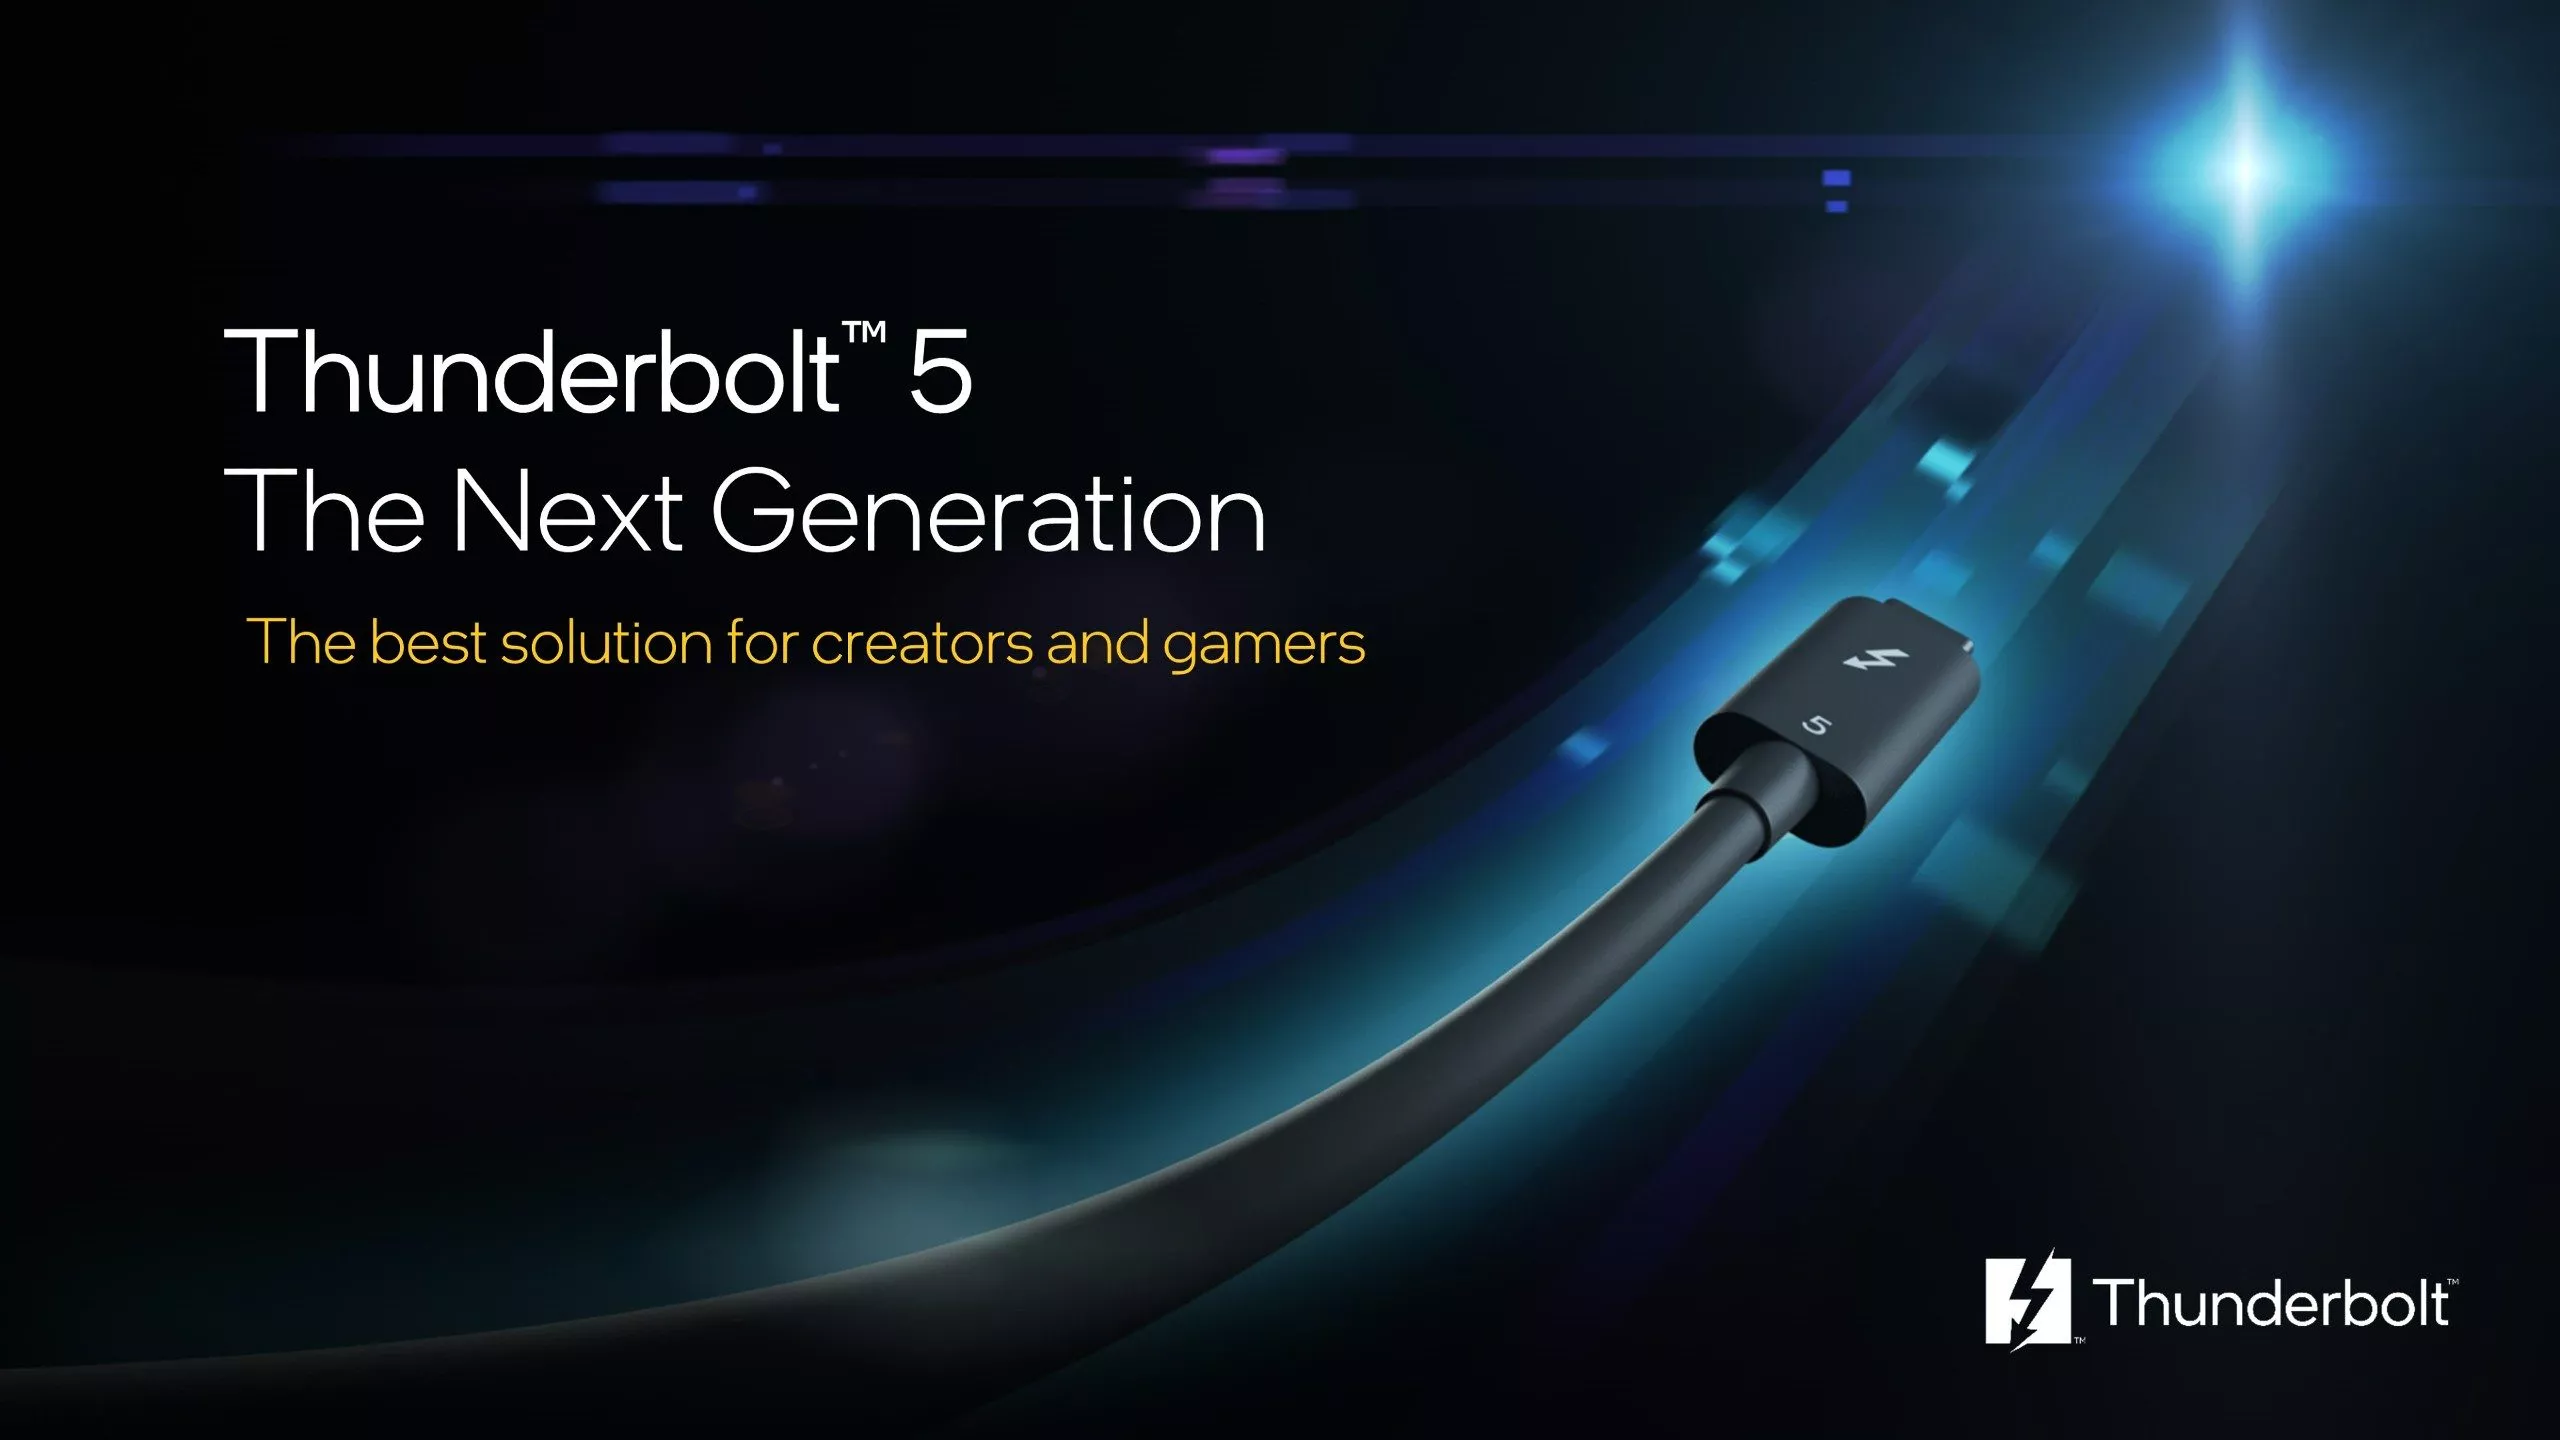 Thunderbolt-5-Kabel vor schwarzem Hintergrund, daneben der Text "Thunderbolt 5 The Next Generation, The best solution for creators and gamers".